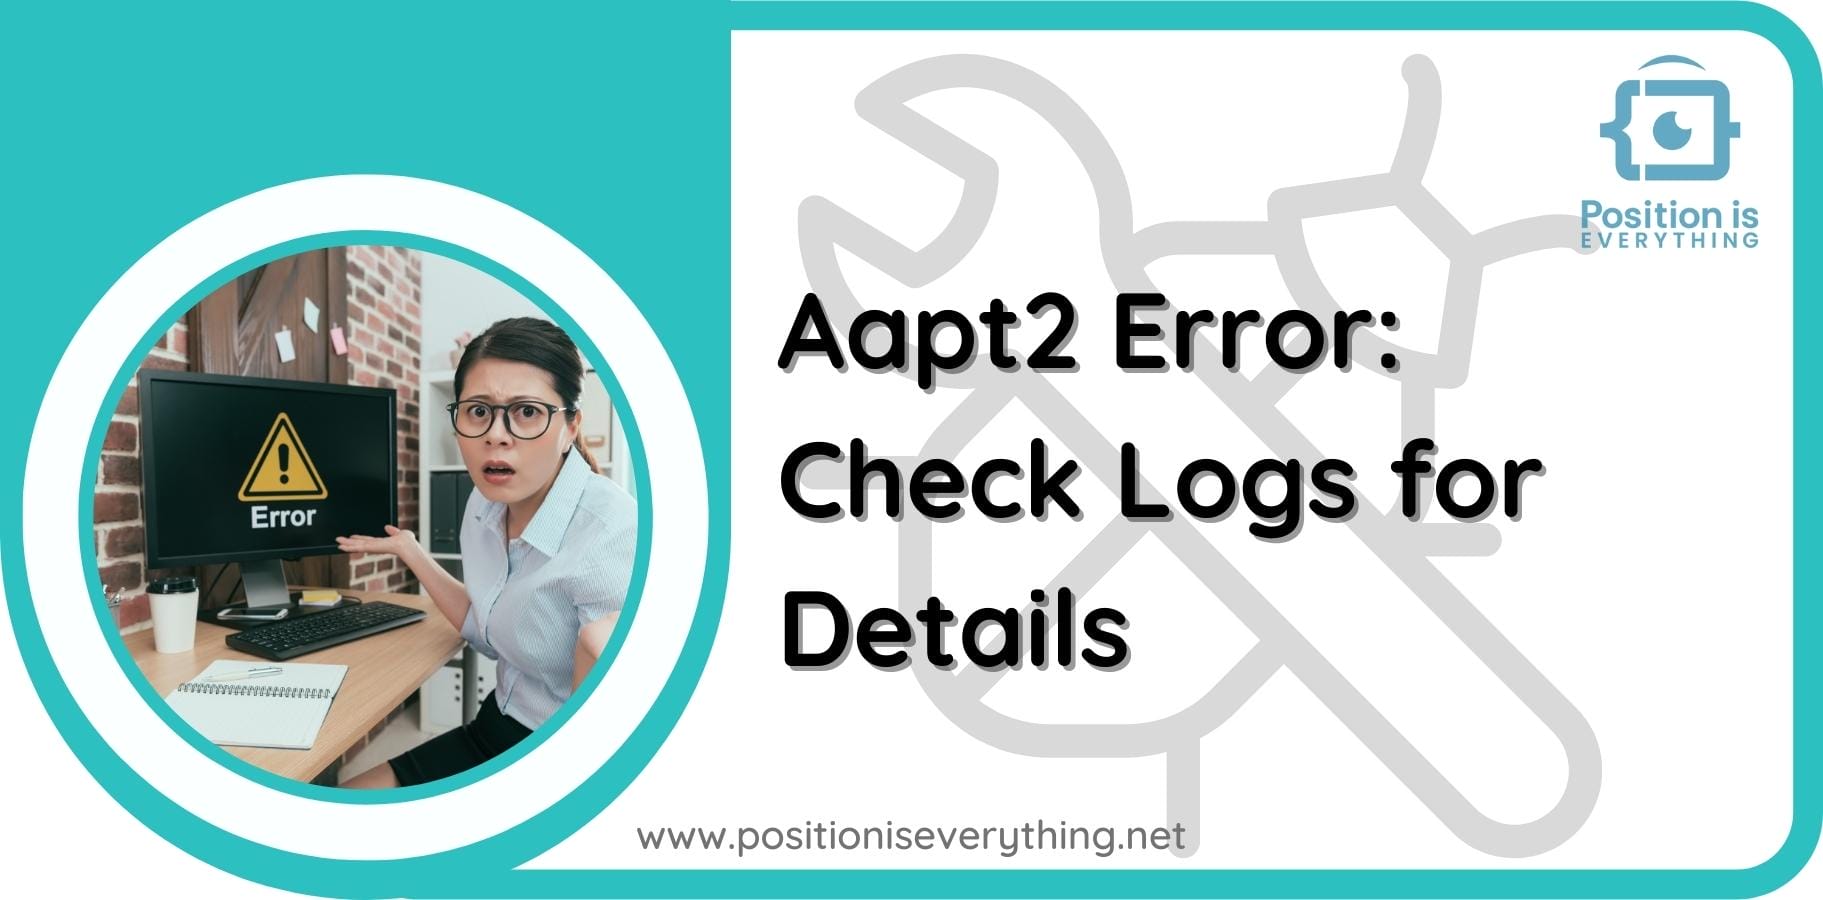 Aapt error check logs for details